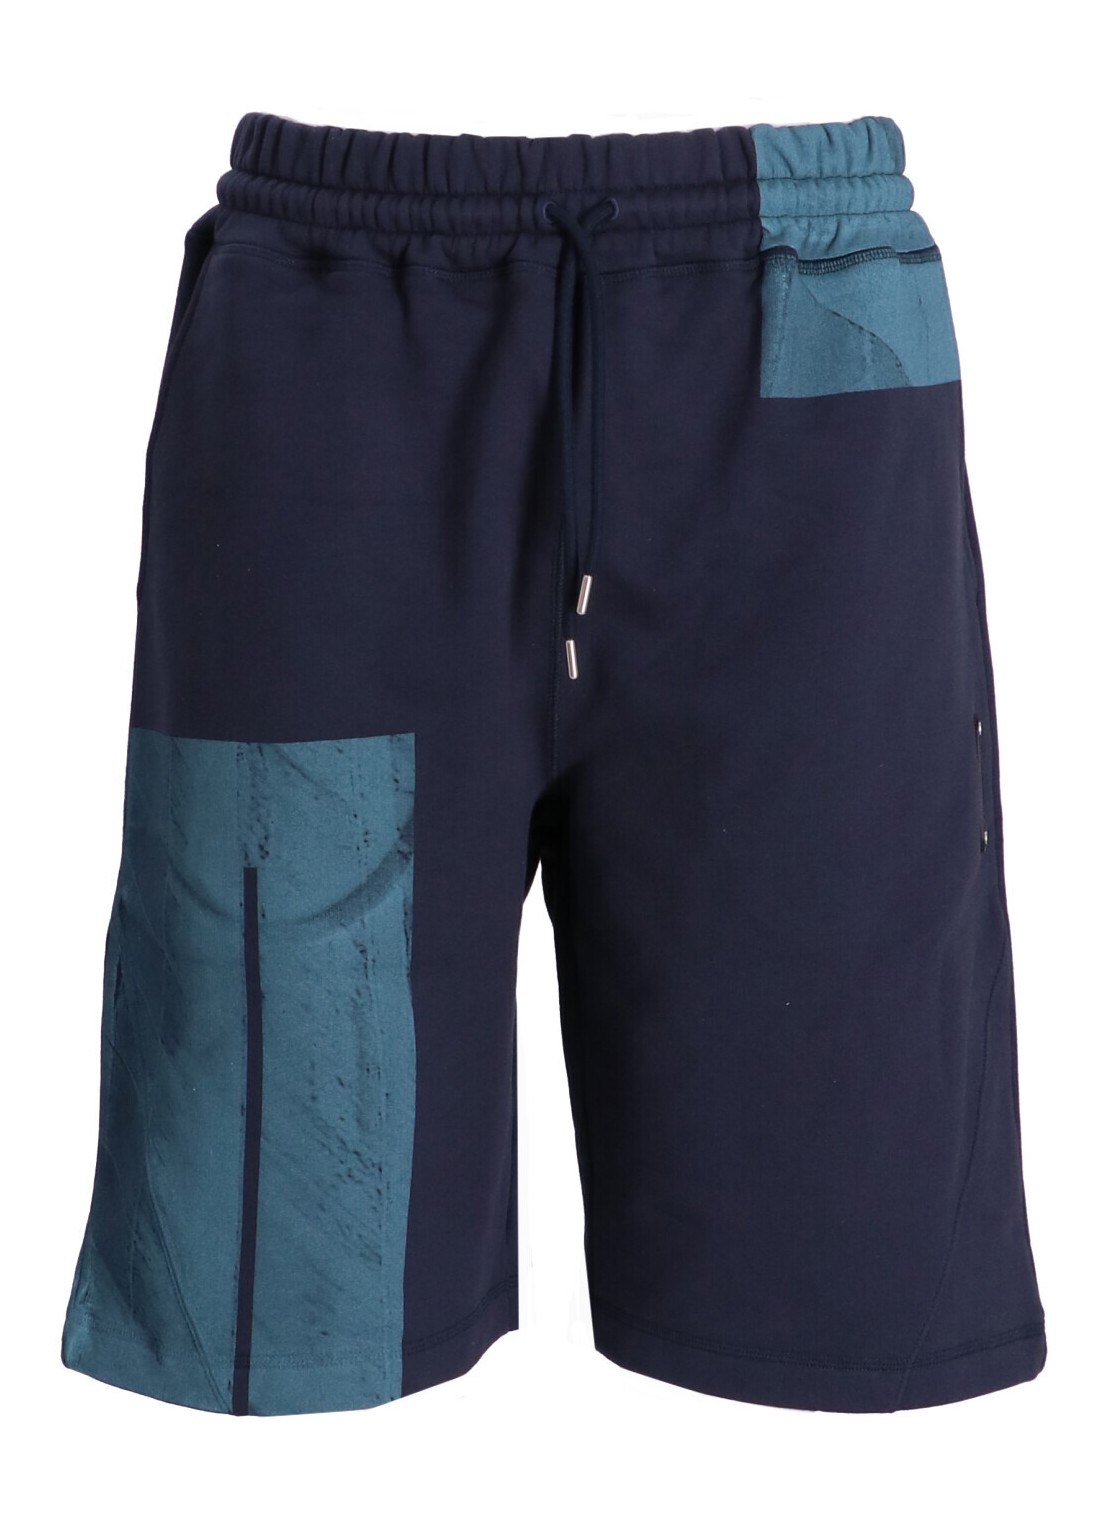 Pantalon corto a-cold-wall* short pant man strand sweatshort acwmb282 navy navy talla L
 